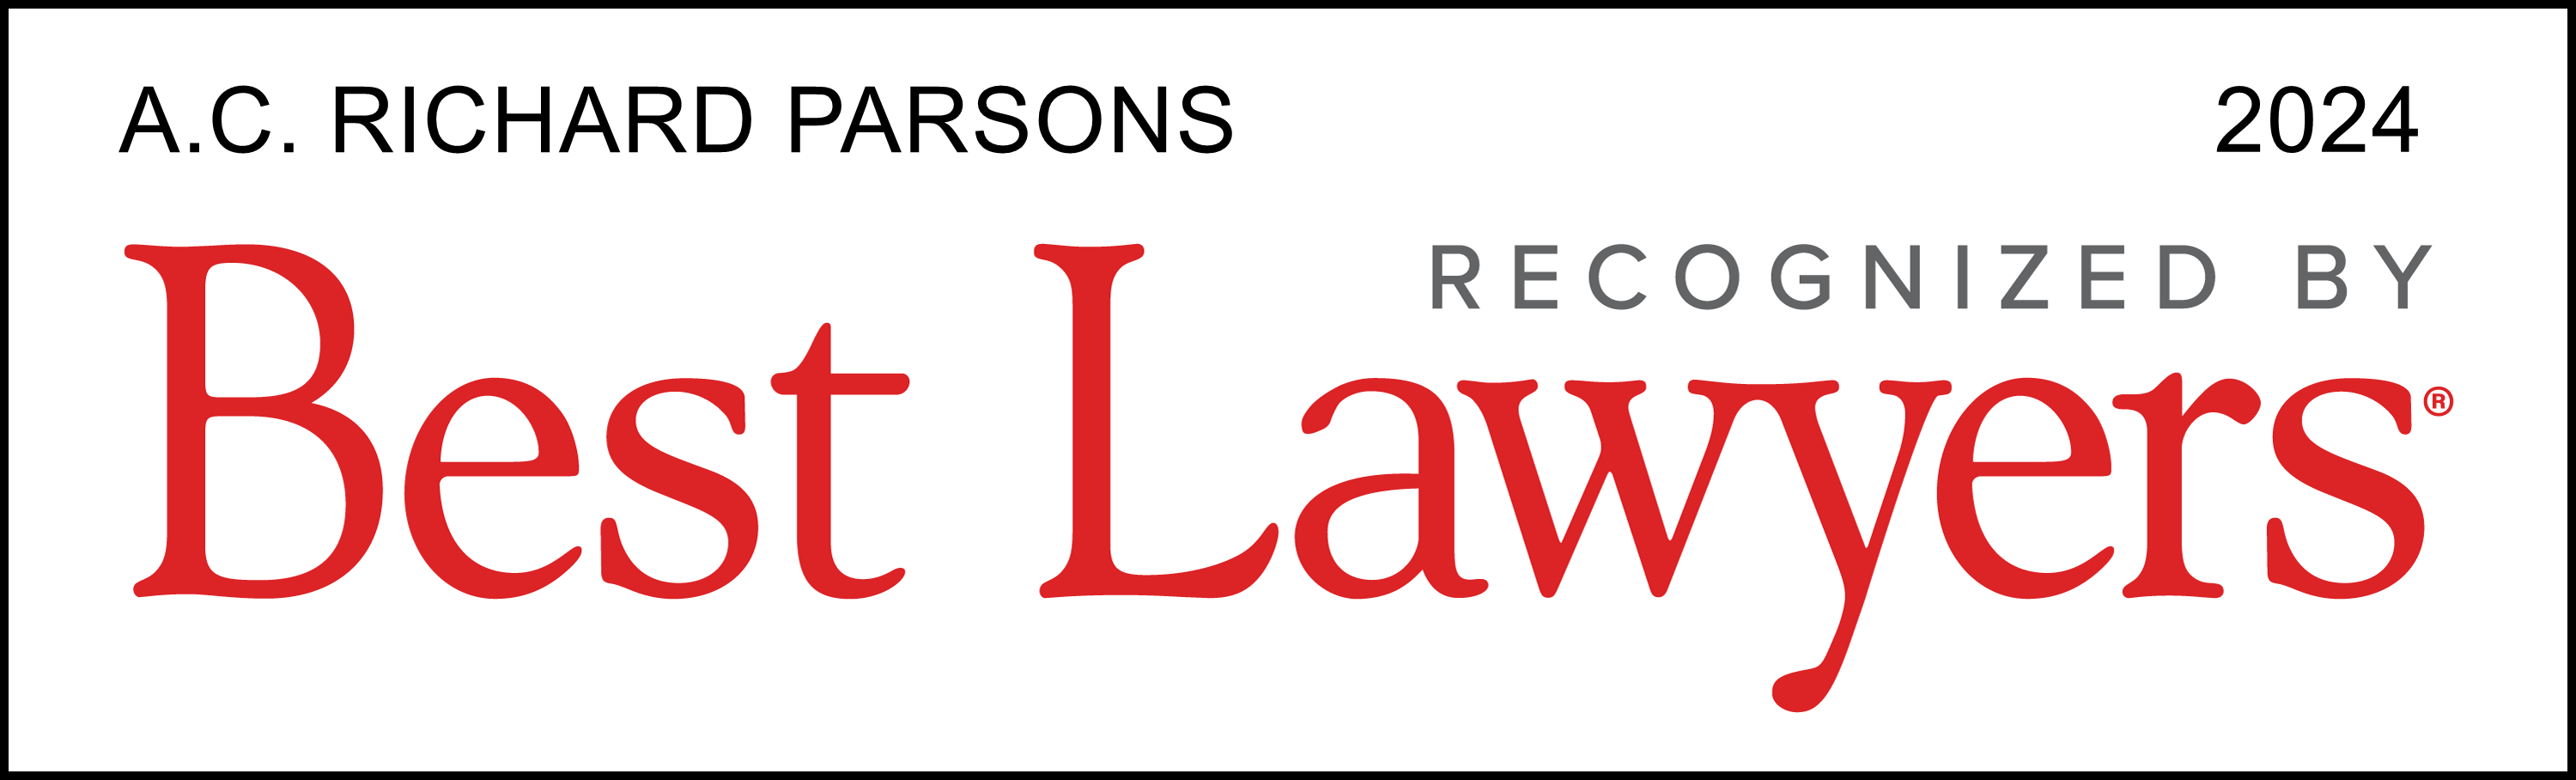 Richard Parsons - 2020 Best Lawyer Recognition